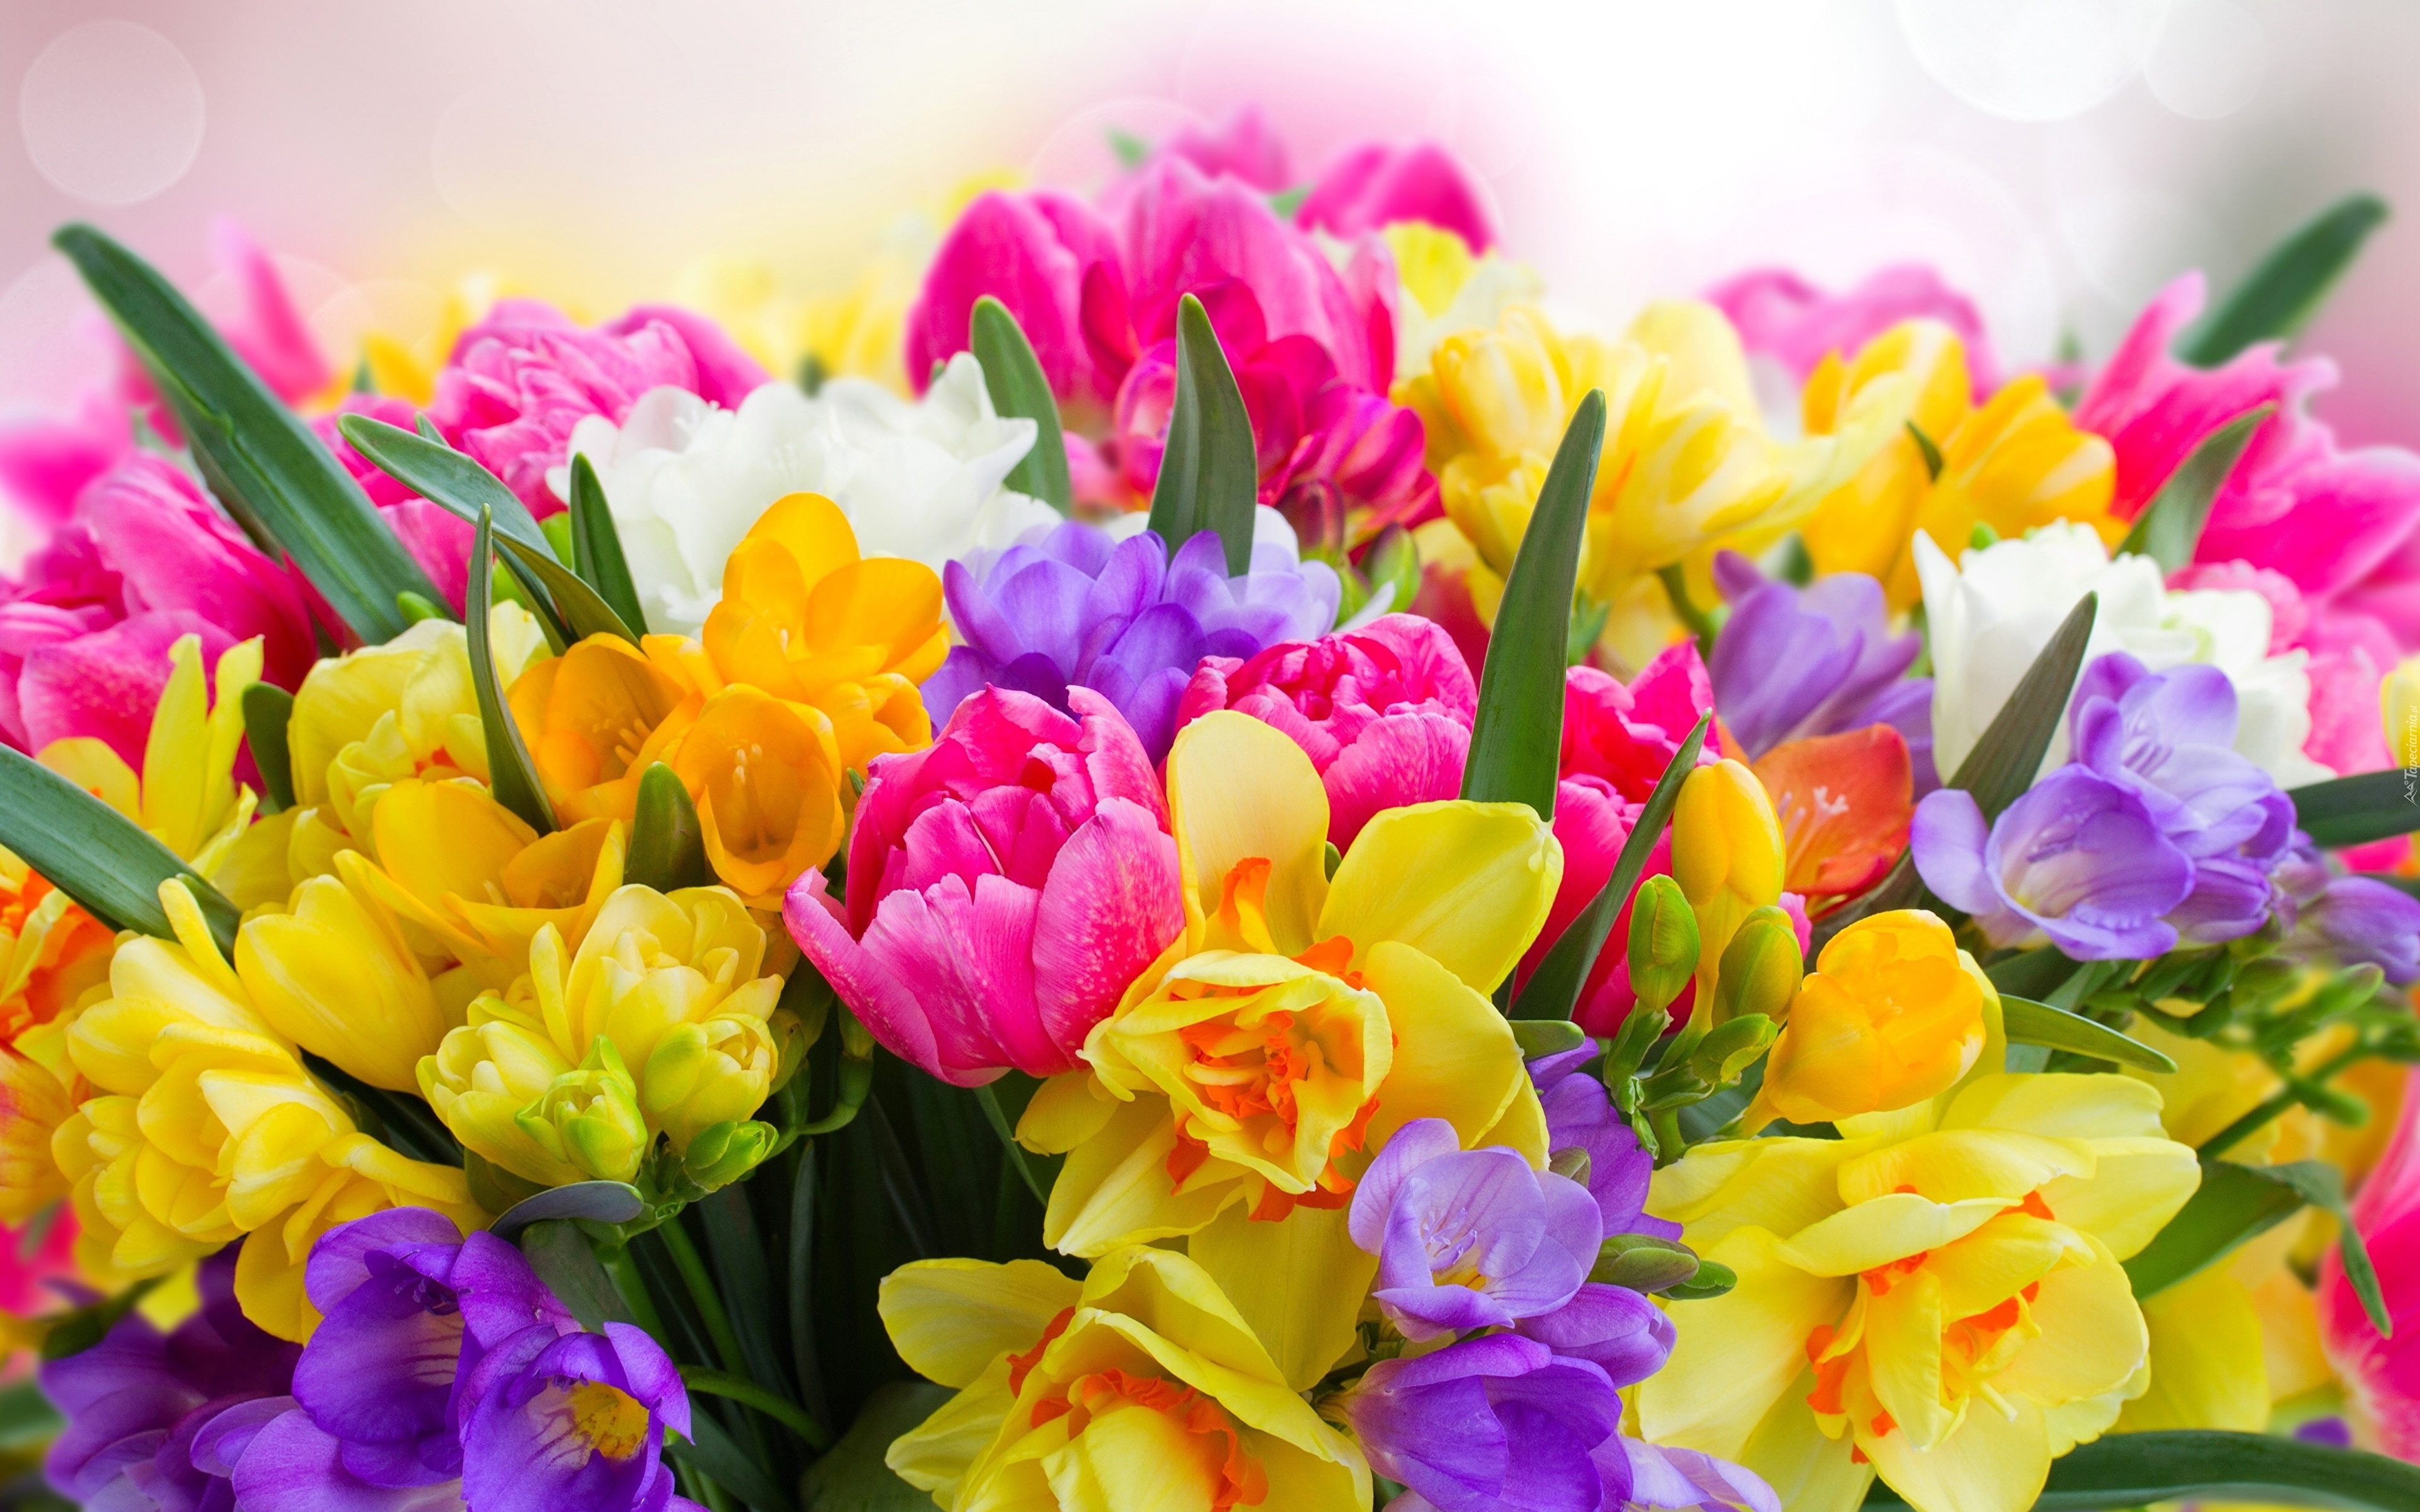 Daffodils_Tulips_Bouquets_544587_3840x2400